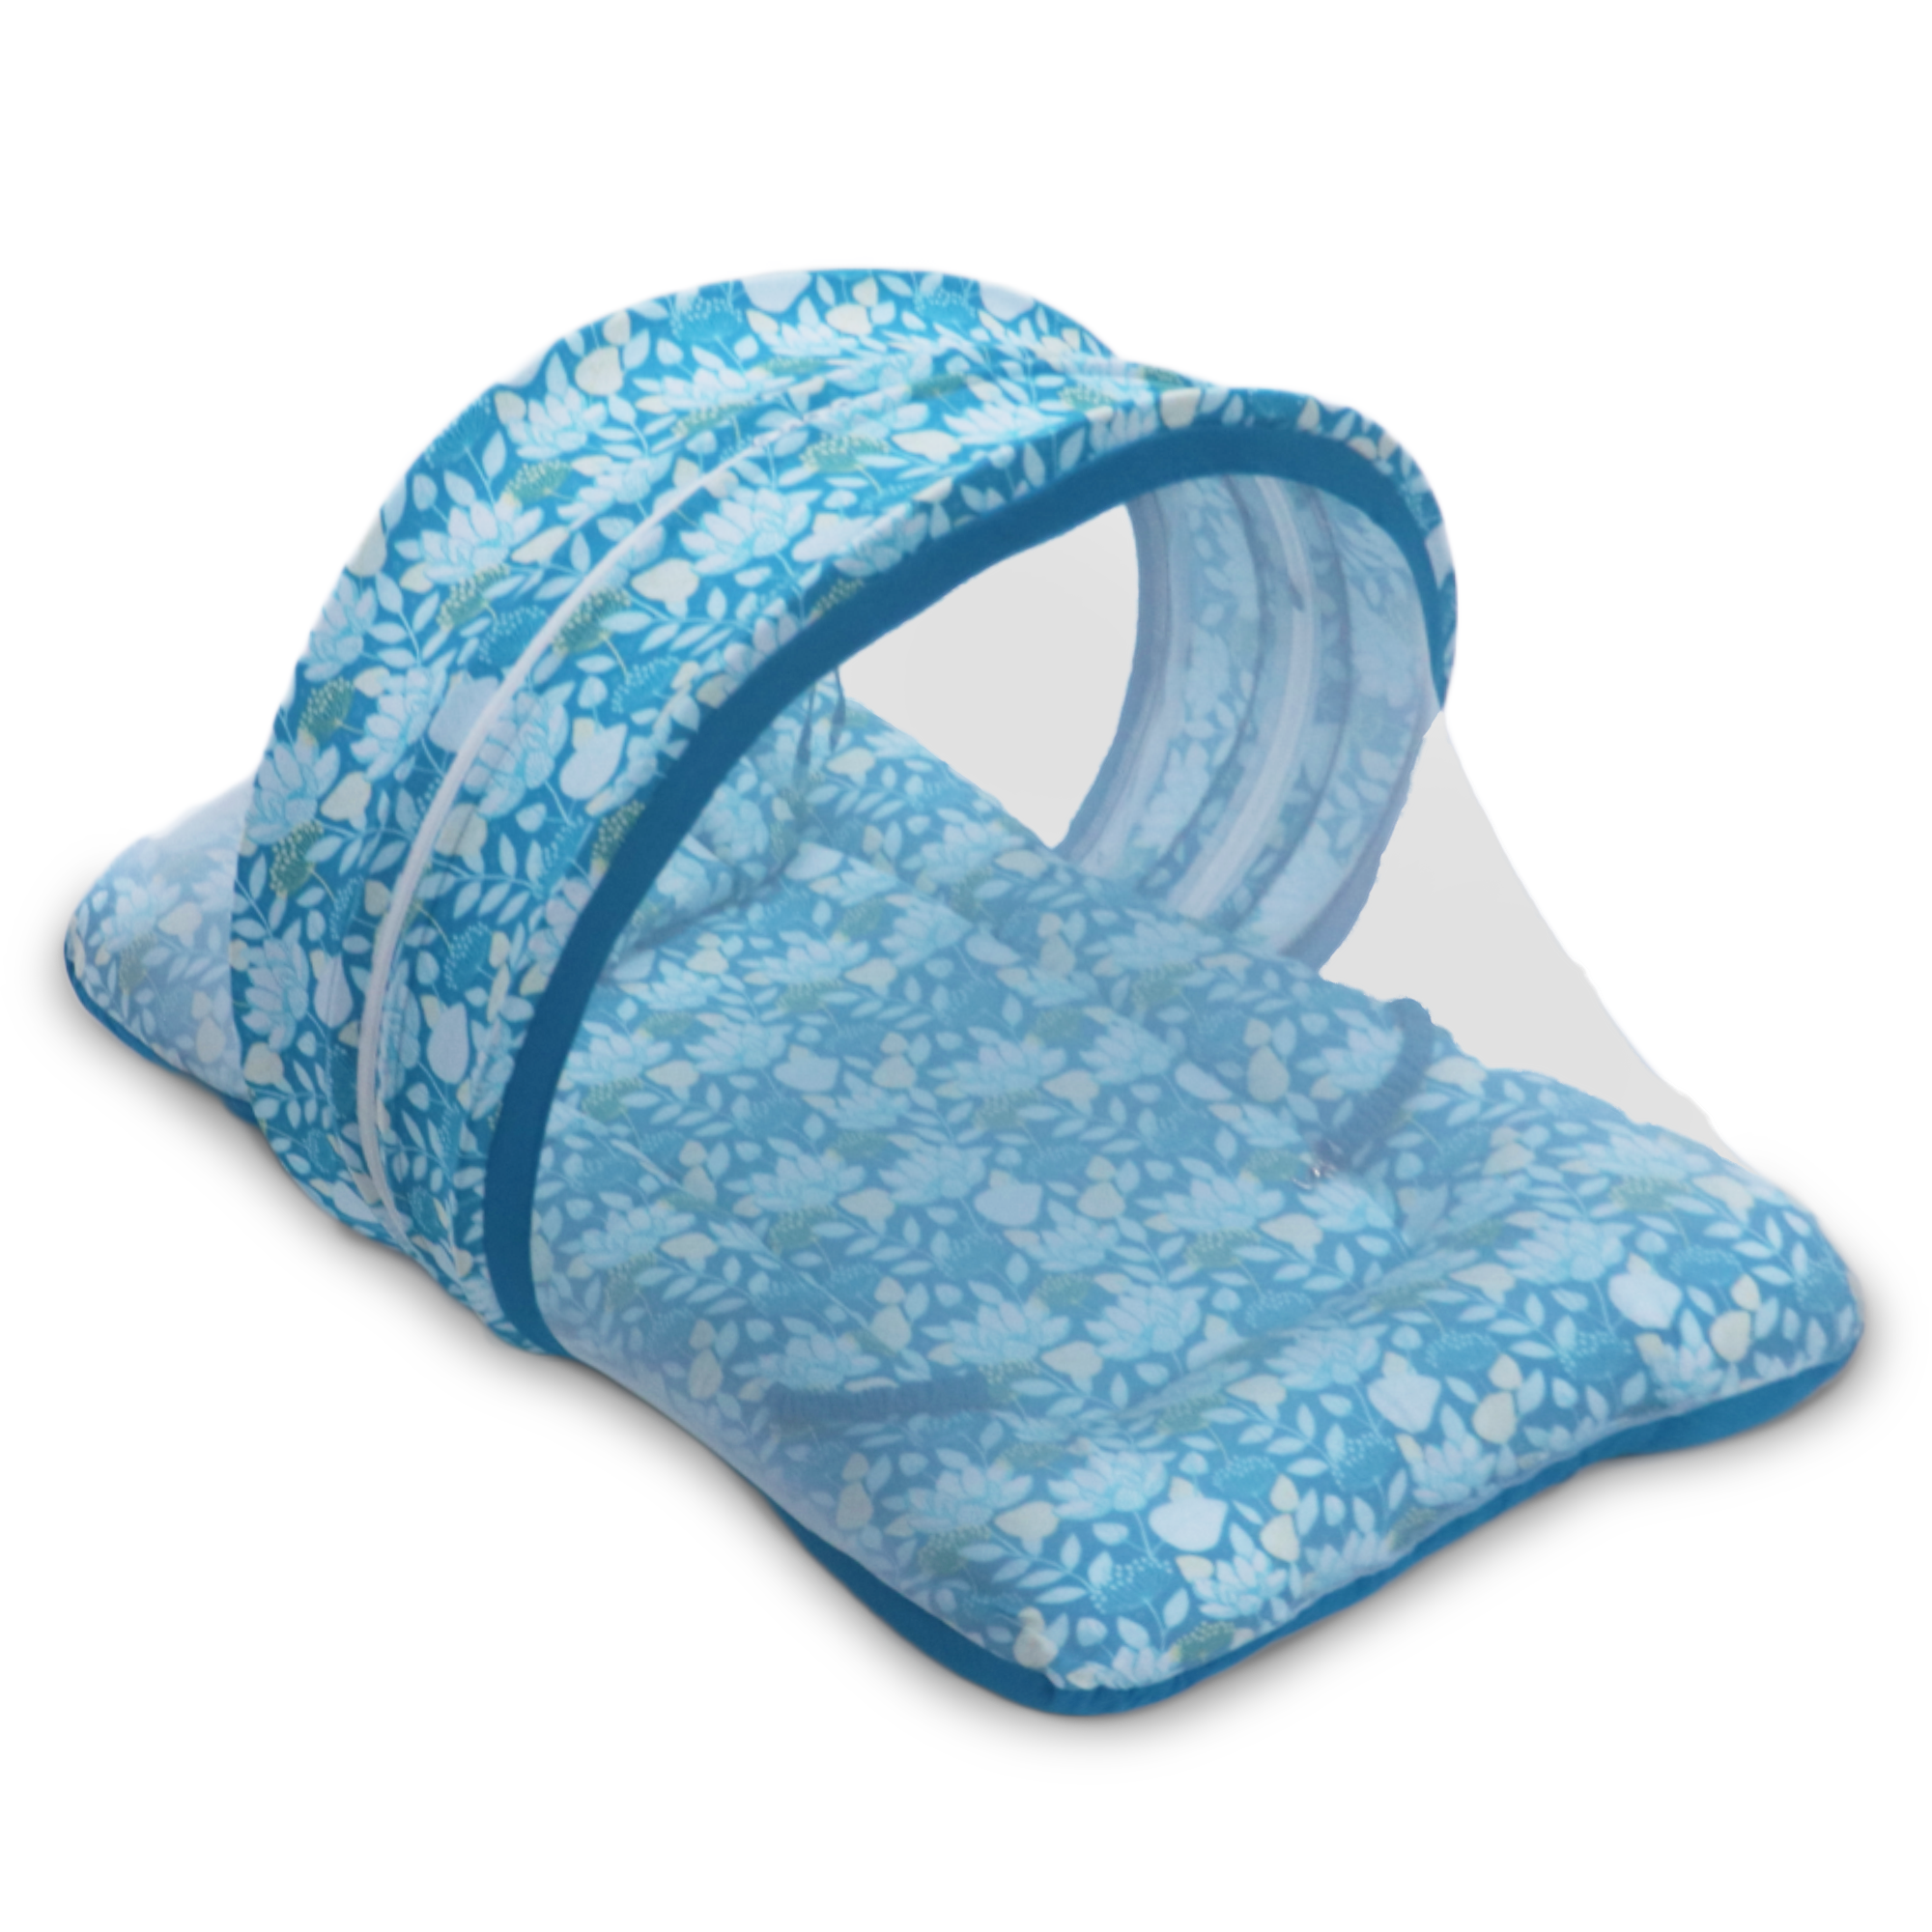 Hydrangea -  Kradyl Kroft Bassinet Style Mosquito Net Bedding for Infants